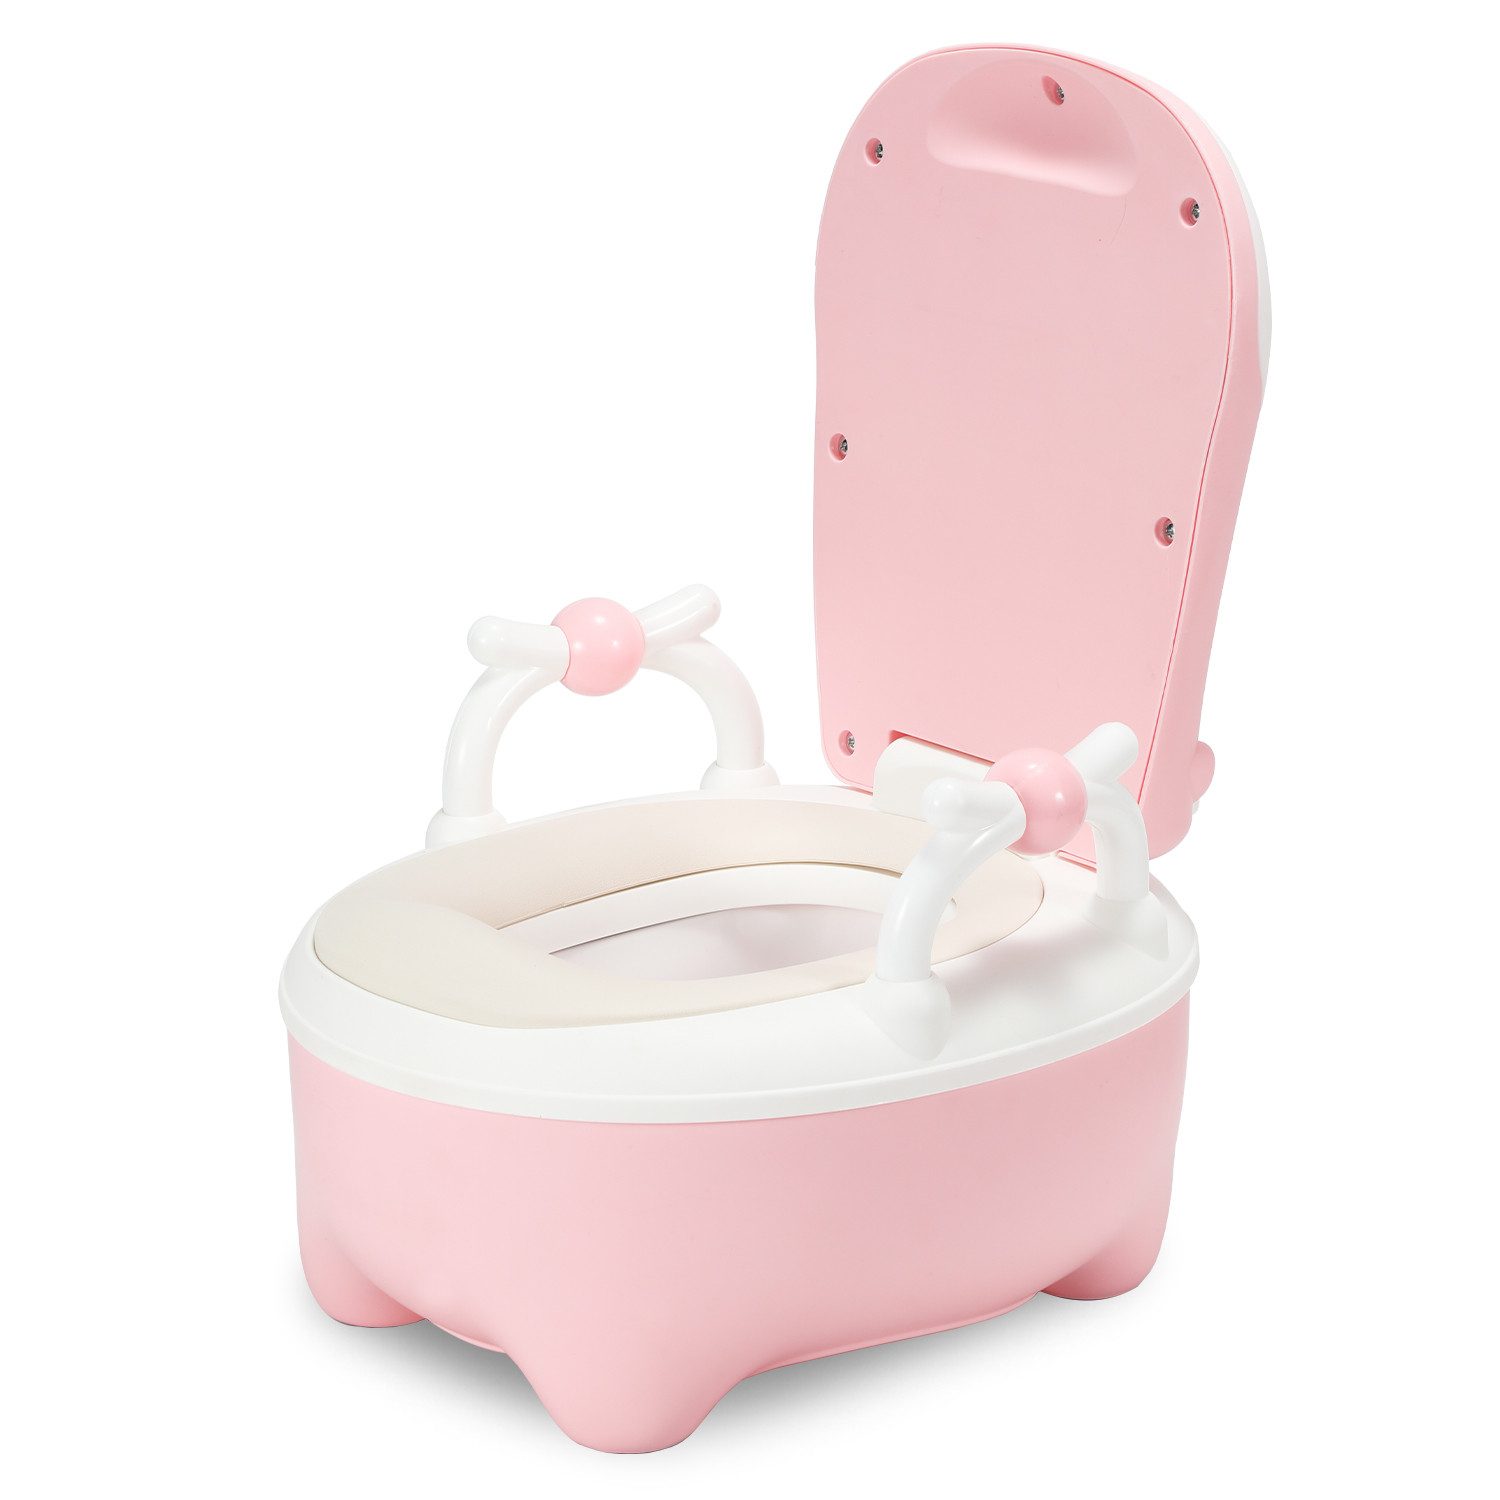 Randaco Toilettentrainer Kindertoilette Baby Kinder Töpfchen Toilettensitz Lerntöpfchen, Kindertoilette